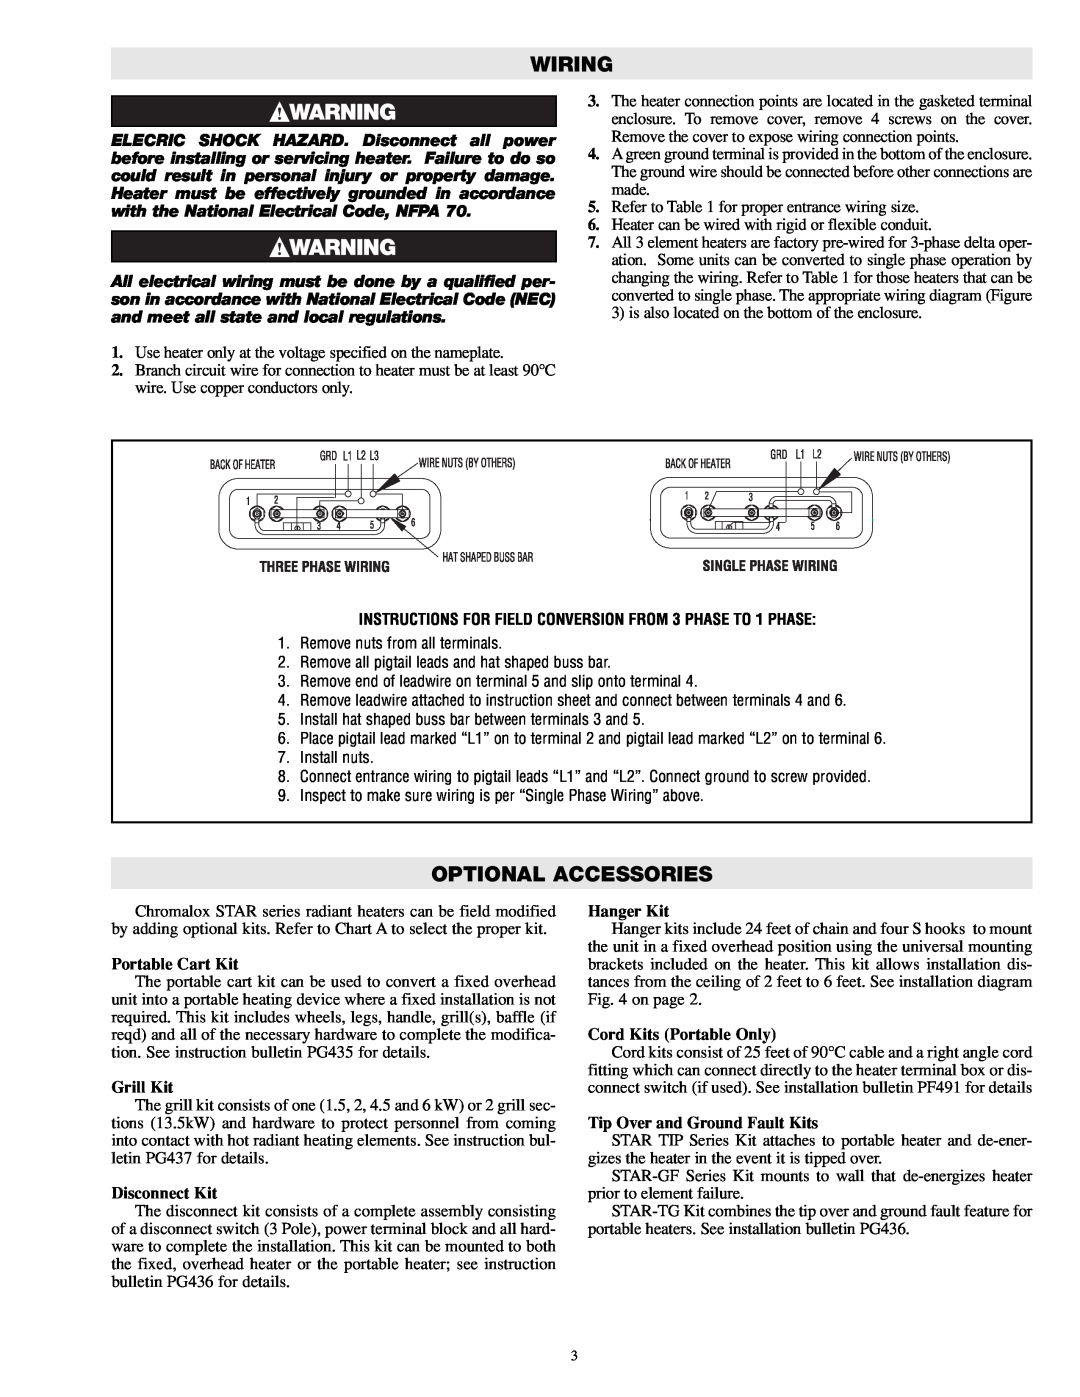 Chromalox PG434-3, PG434-4 Wiring, Optional Accessories, Portable Cart Kit, Grill Kit, Disconnect Kit, Hanger Kit 